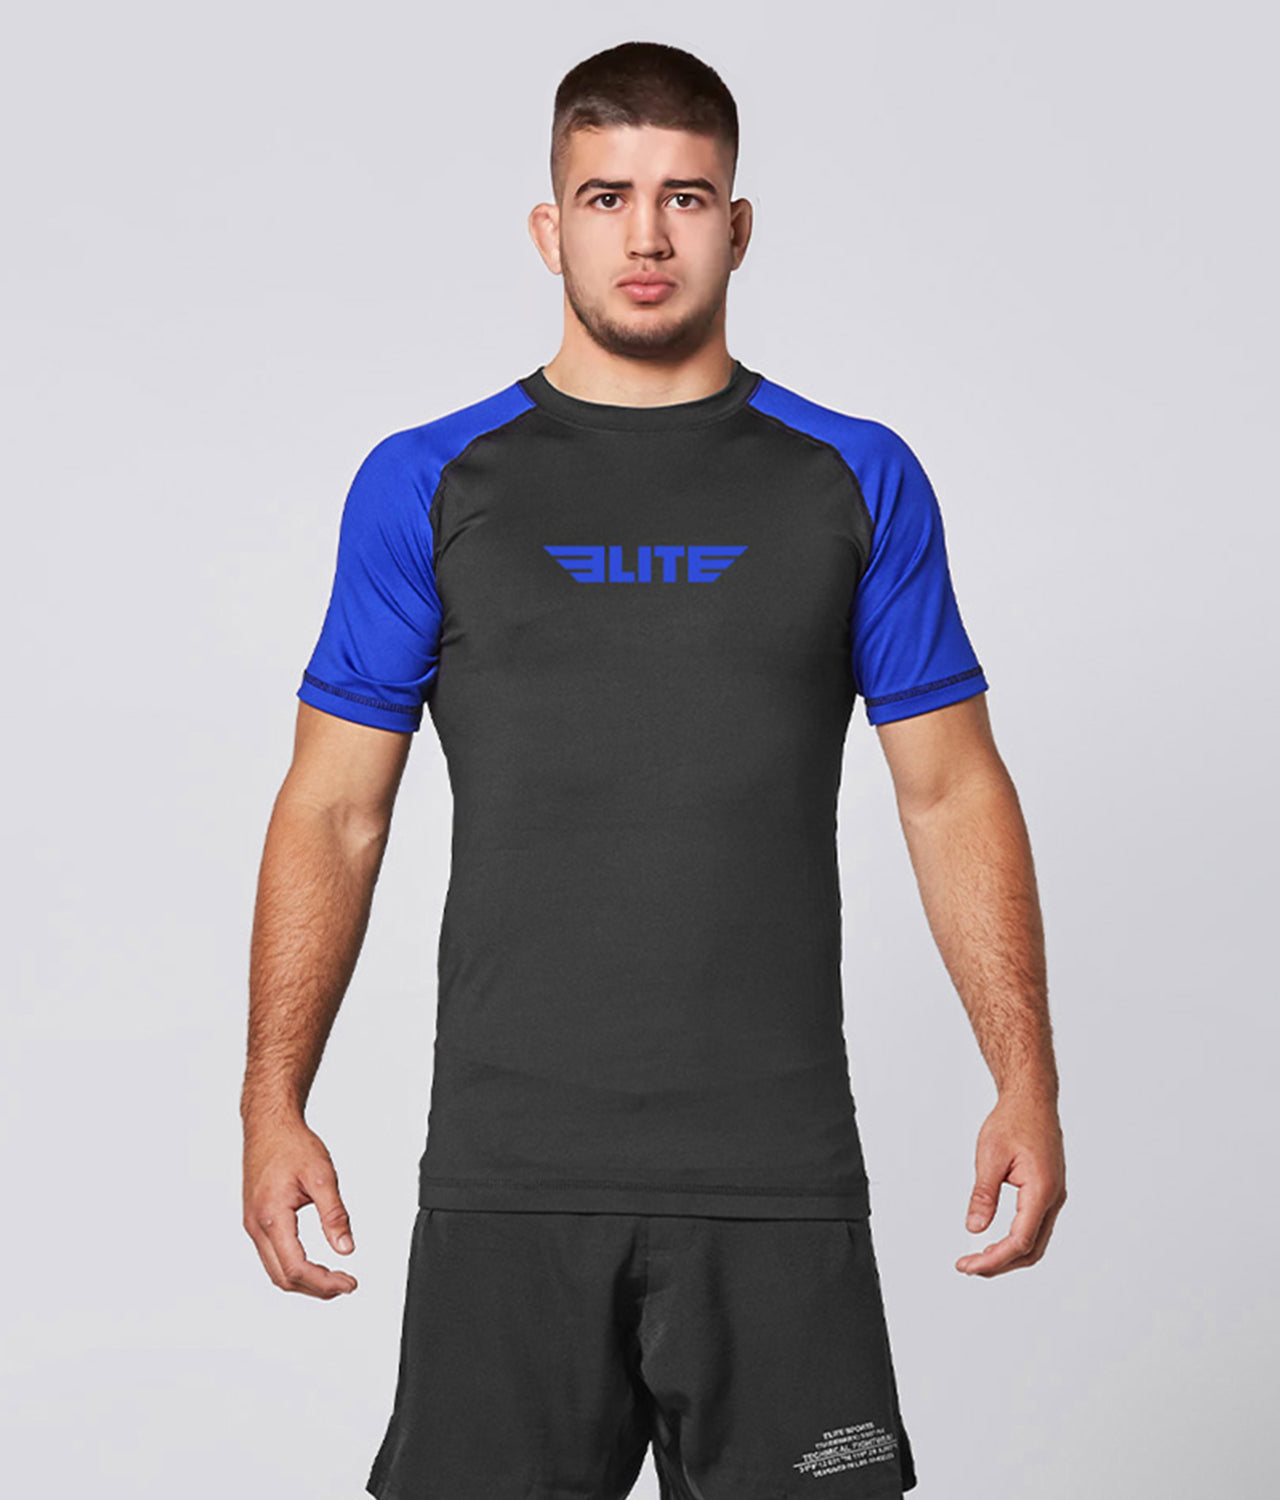 Elite Sports Men's Standard Blue Short Sleeve Training Rash Guard